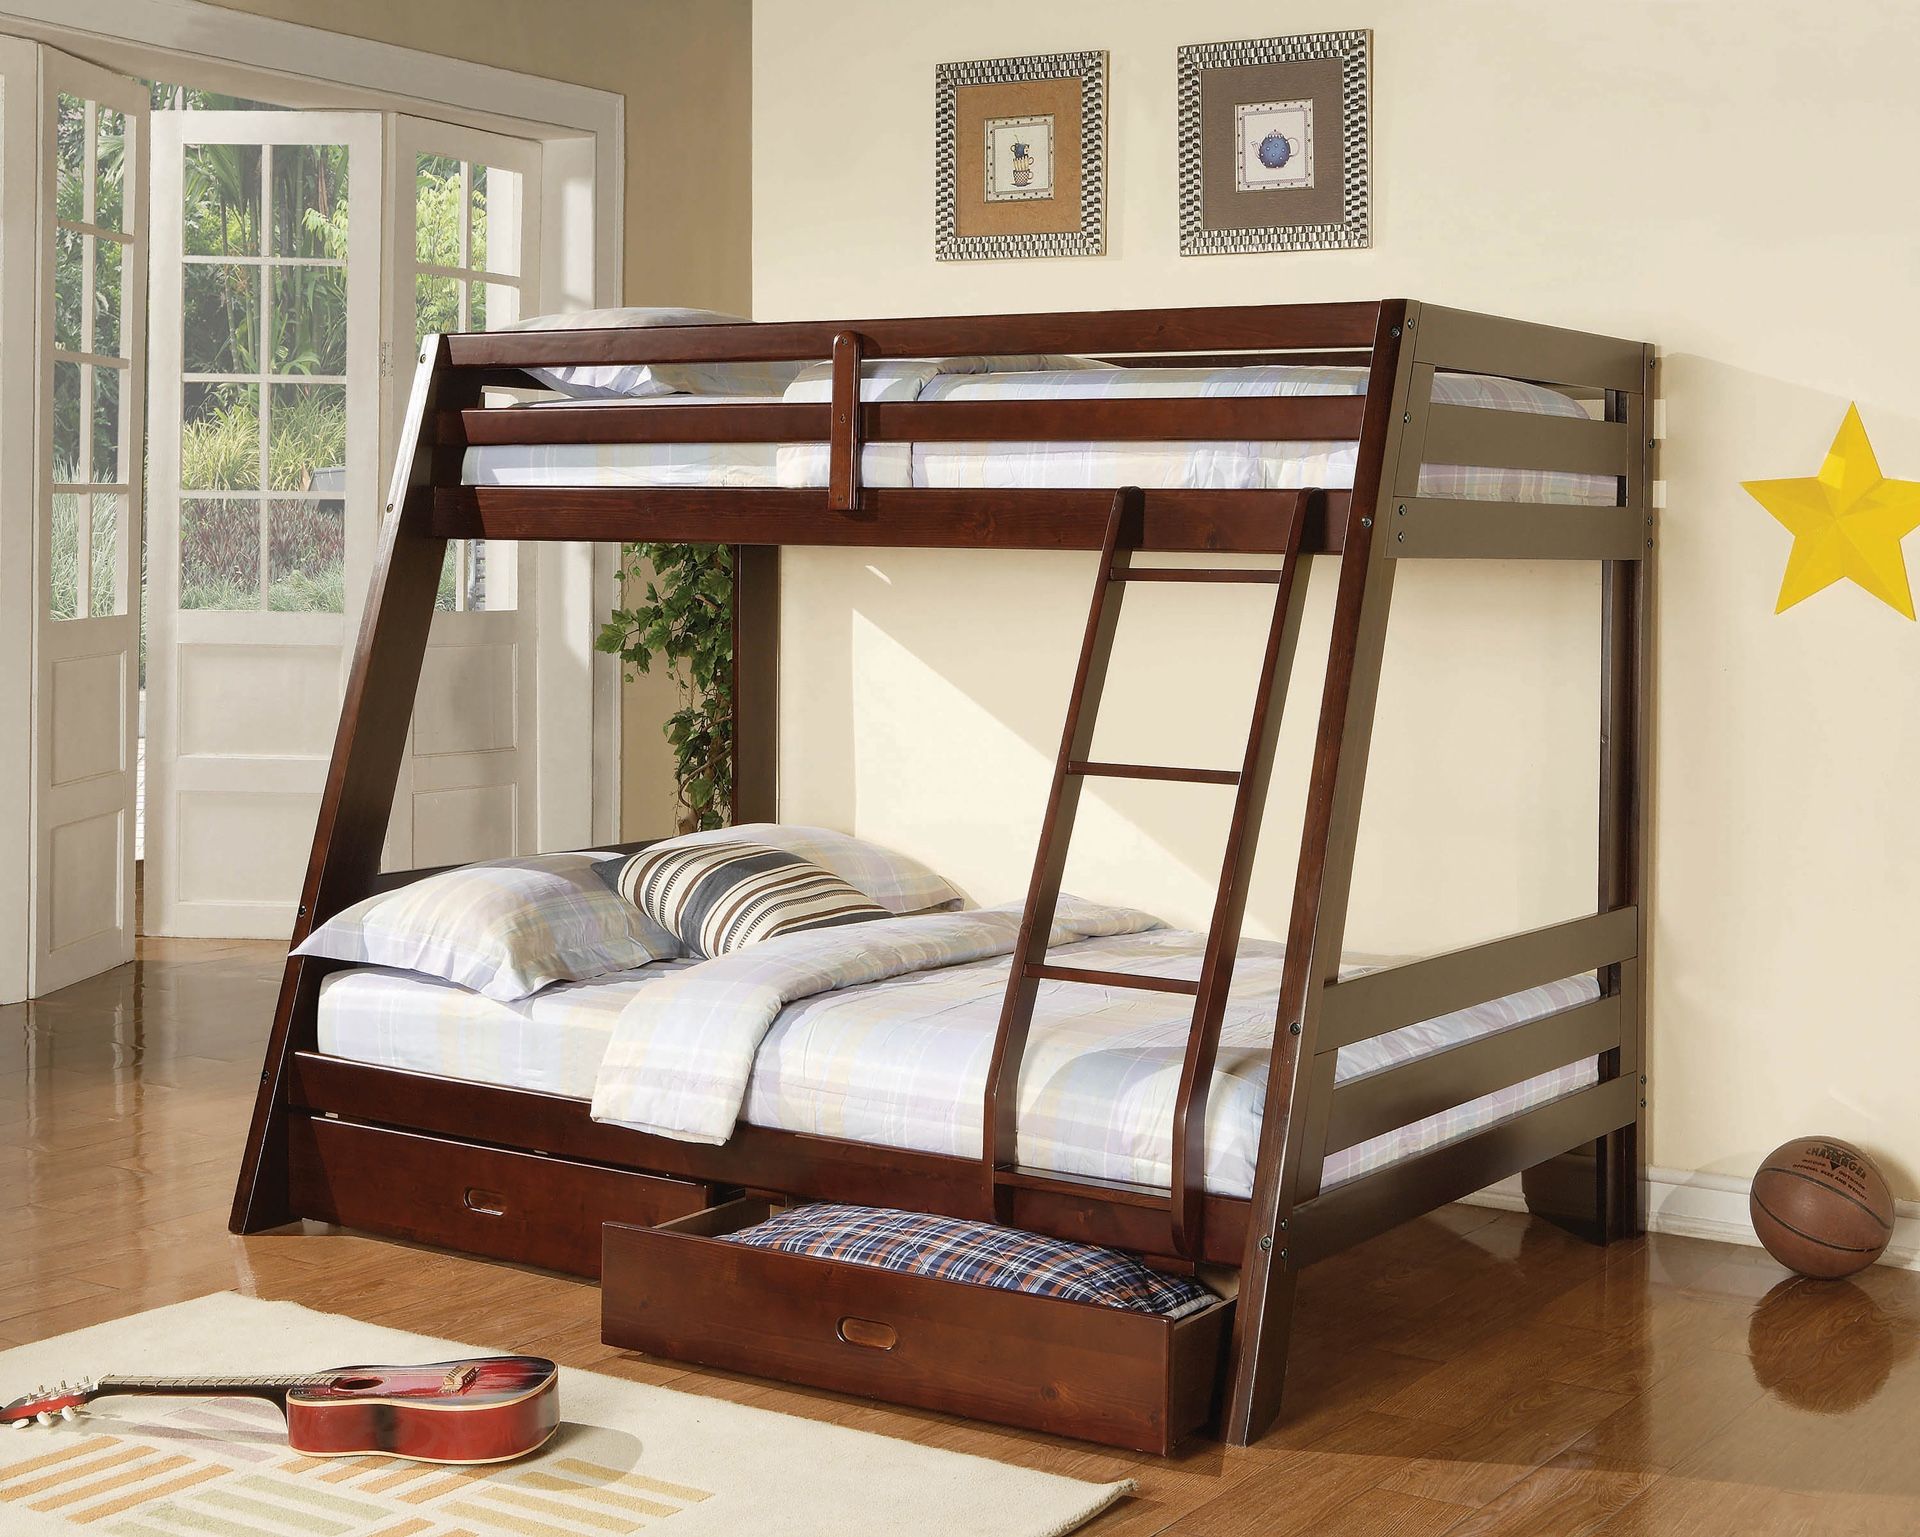 Twin /full bunk bed $599🔥🔥 4672 n blackstone ave Fresno ca 93726